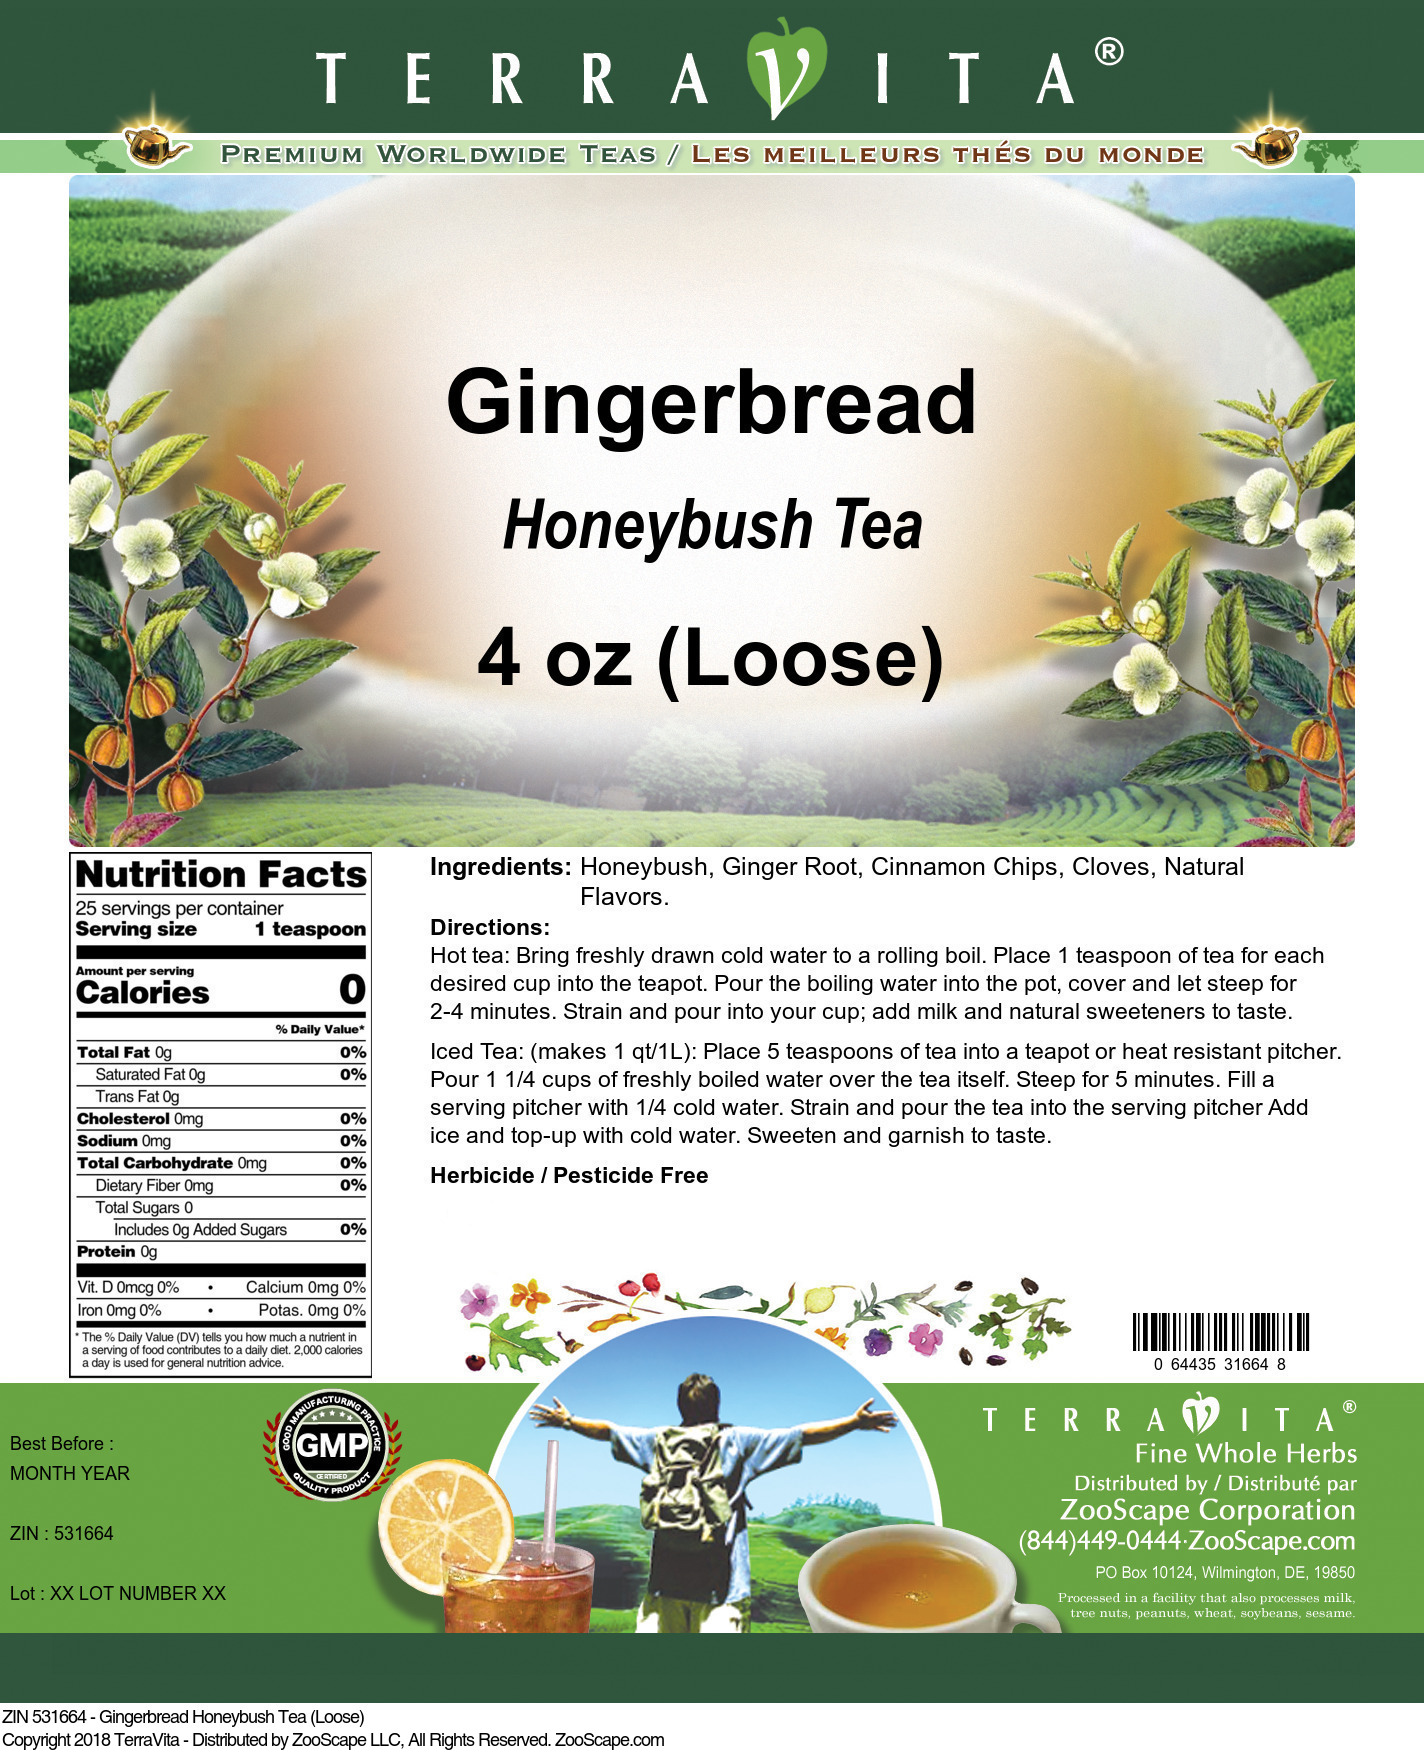 Gingerbread Honeybush Tea (Loose) - Label